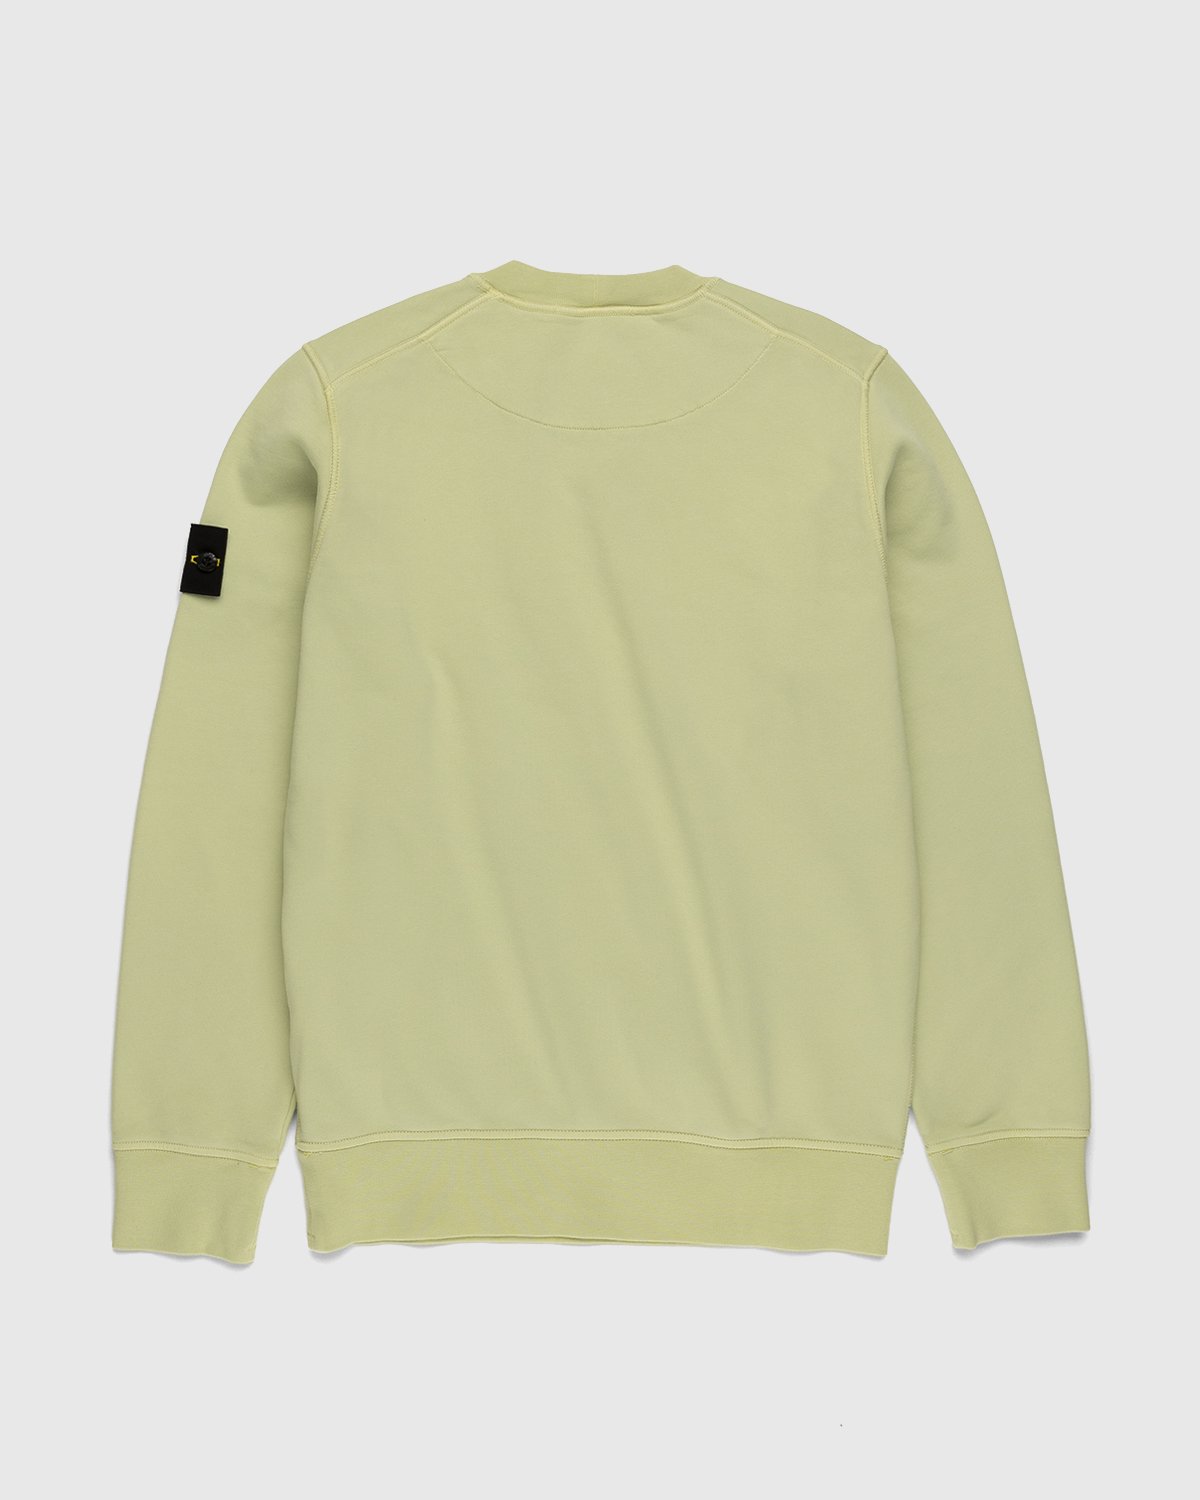 Stone Island - 63051 Garment-Dyed Cotton Fleece Crewneck Light Green - Clothing - Green - Image 2